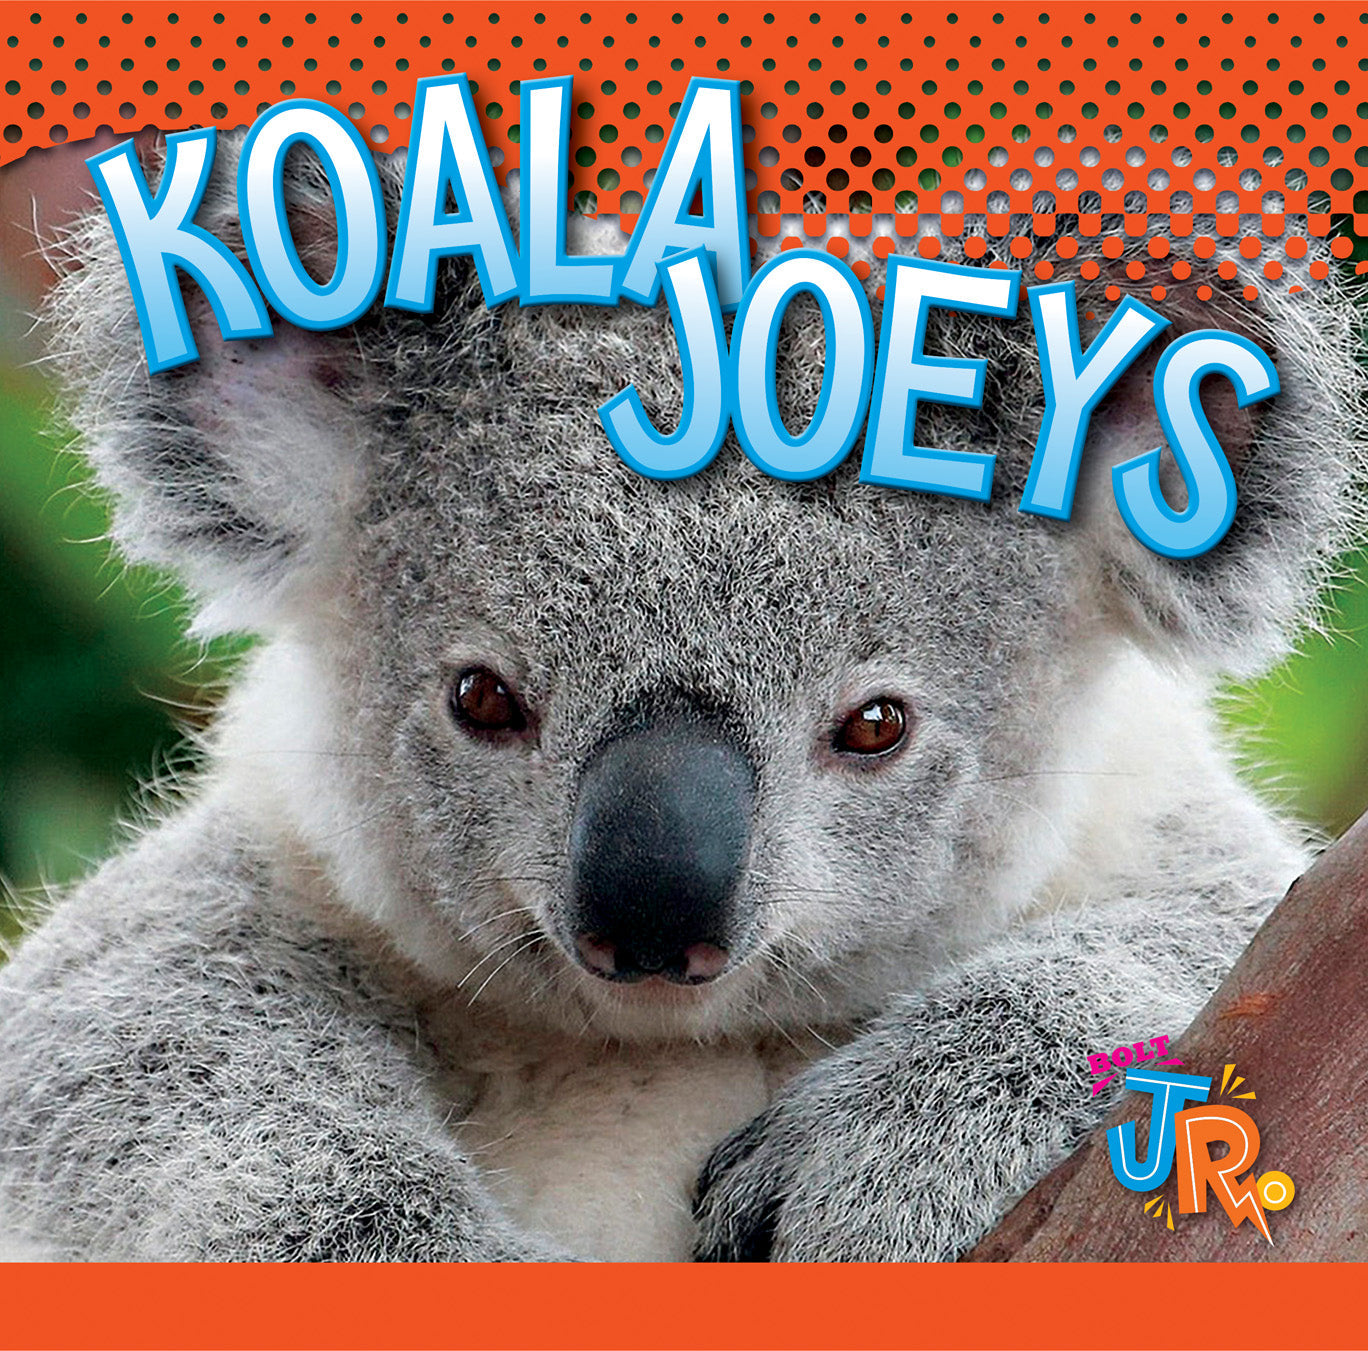 Baby Animals: Koala Joeys